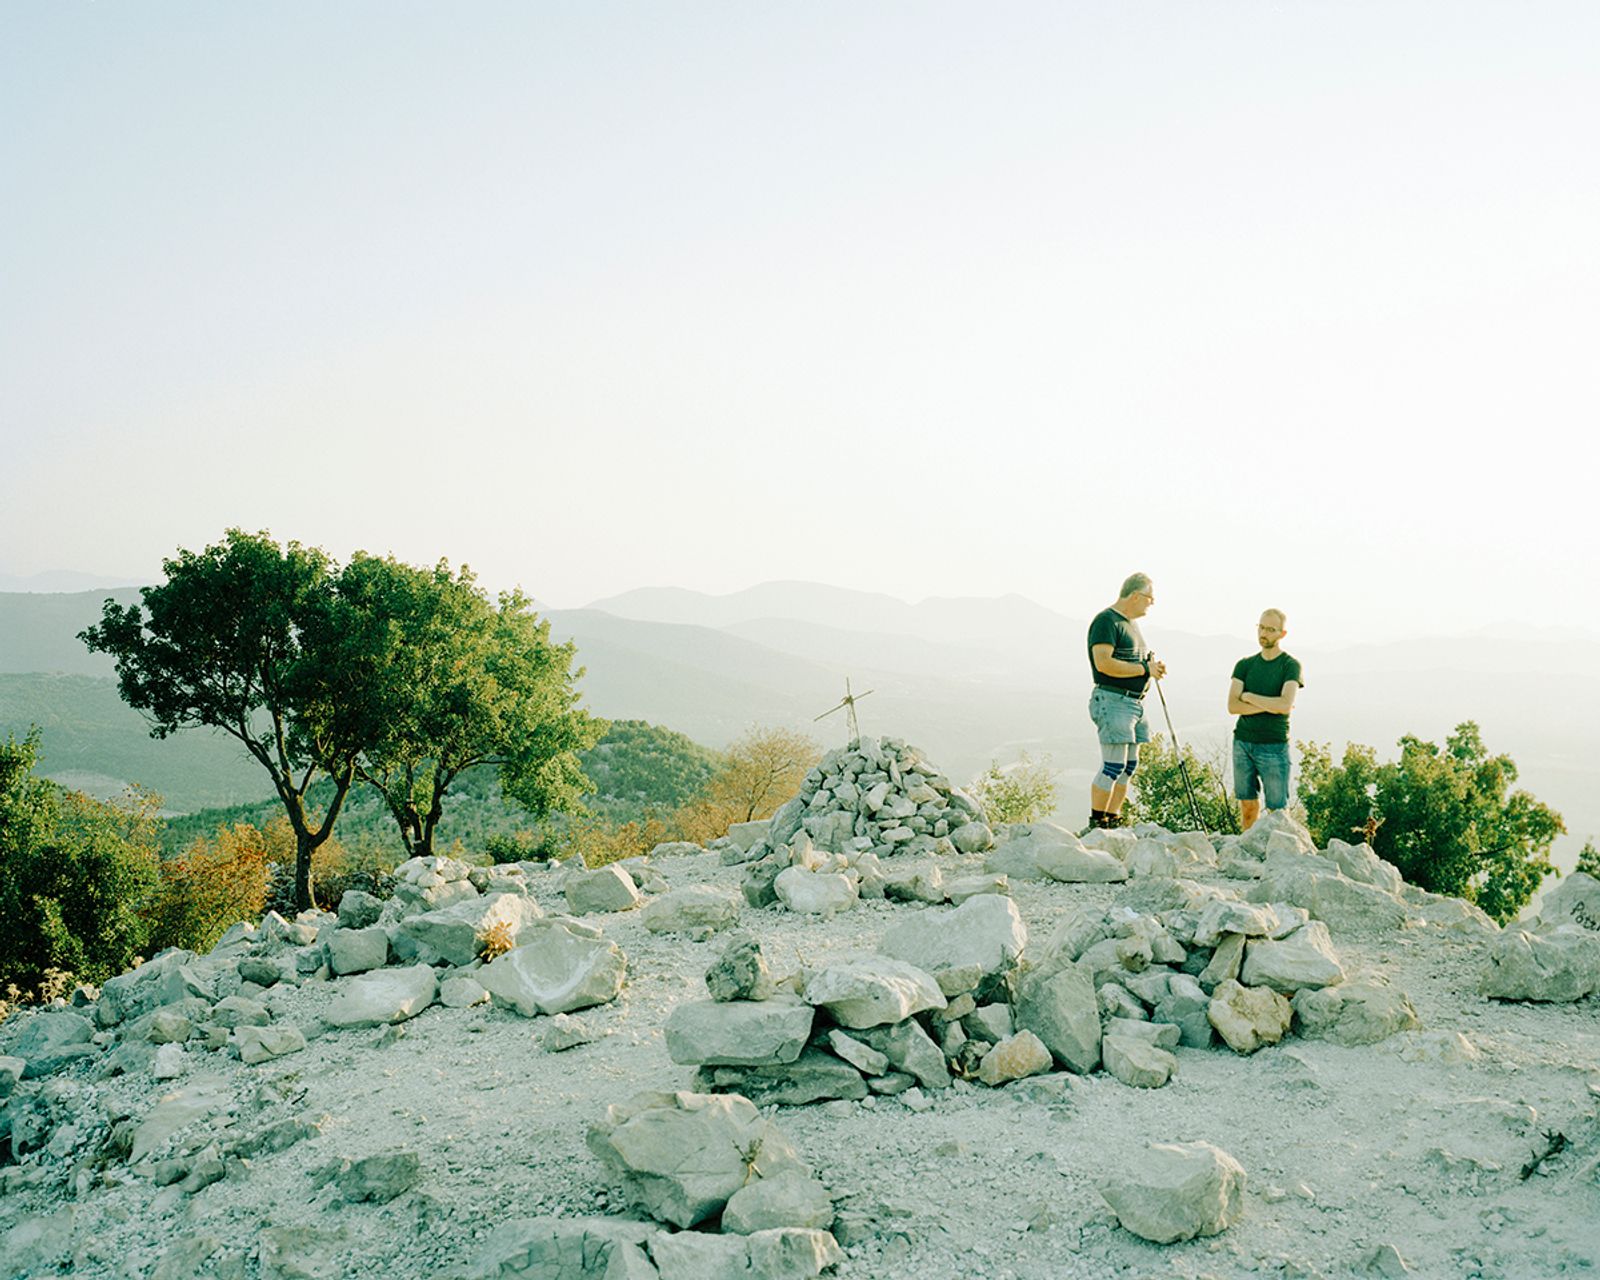 © Miriam Stanke - Two pilgrims reached their goal in Medugorje, a popular Catholic pilgrimage site